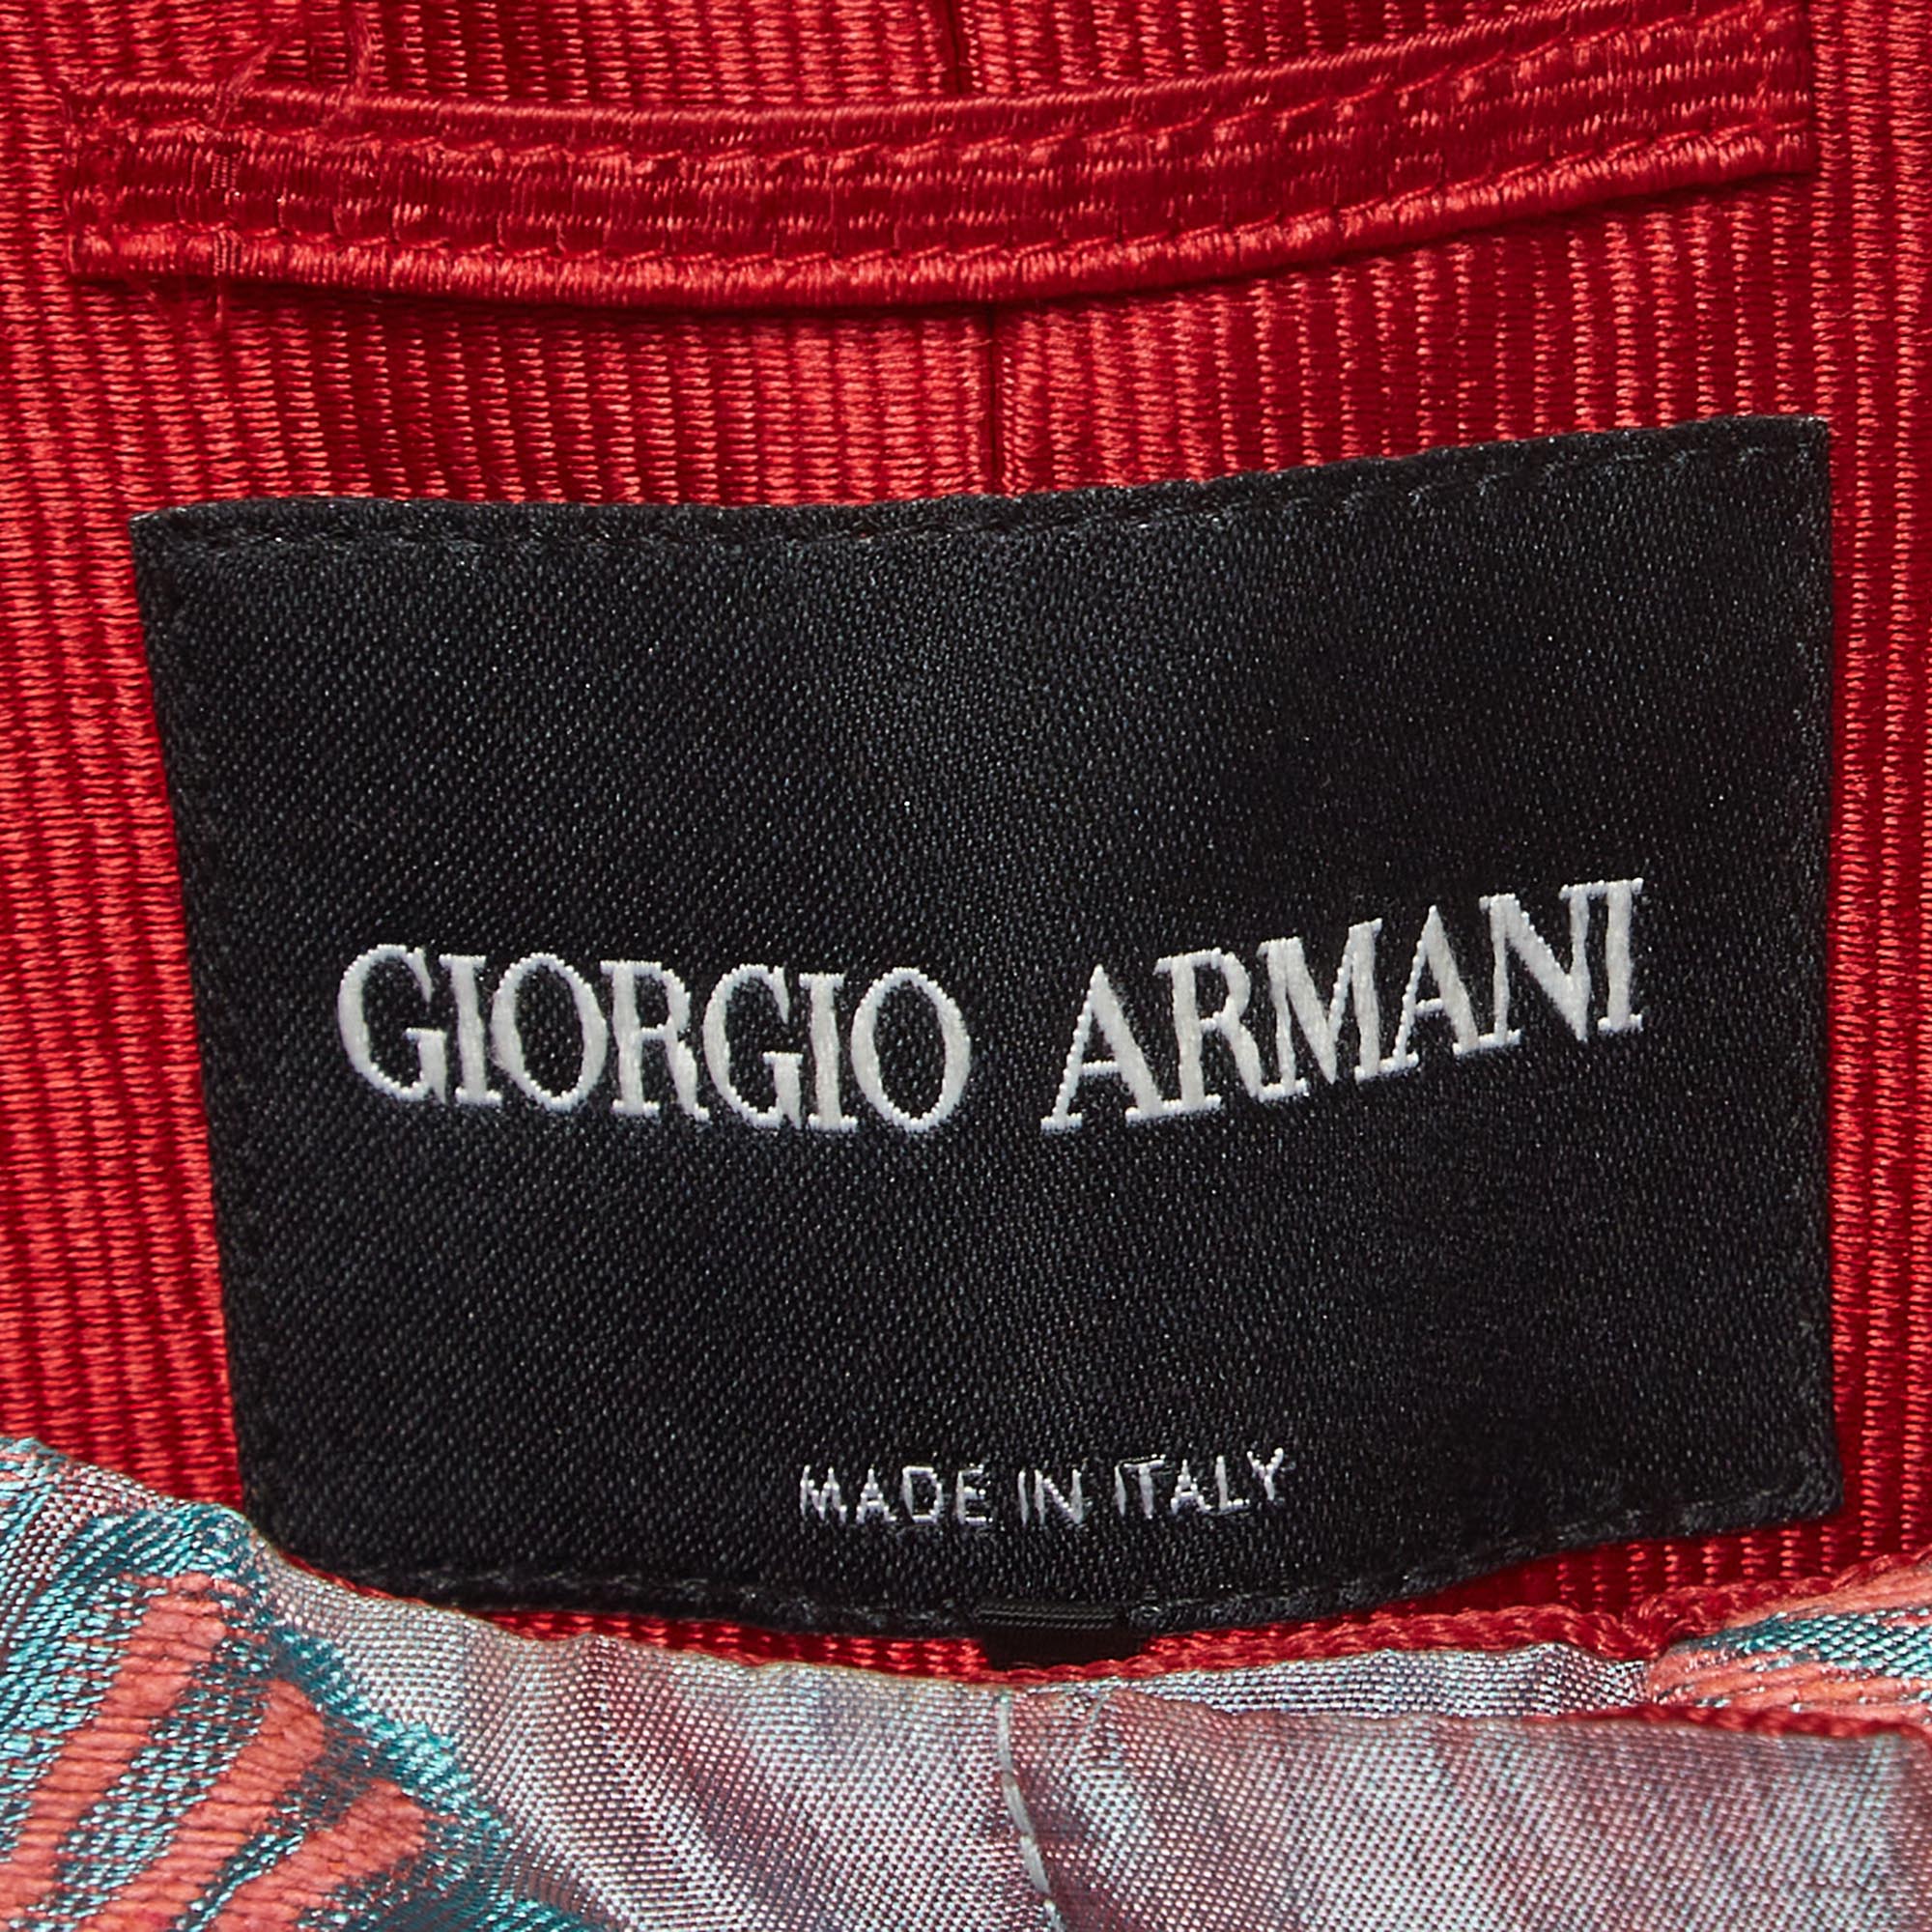 Giorgio Armani Pink Jacquard Zip Front Peplum Top M